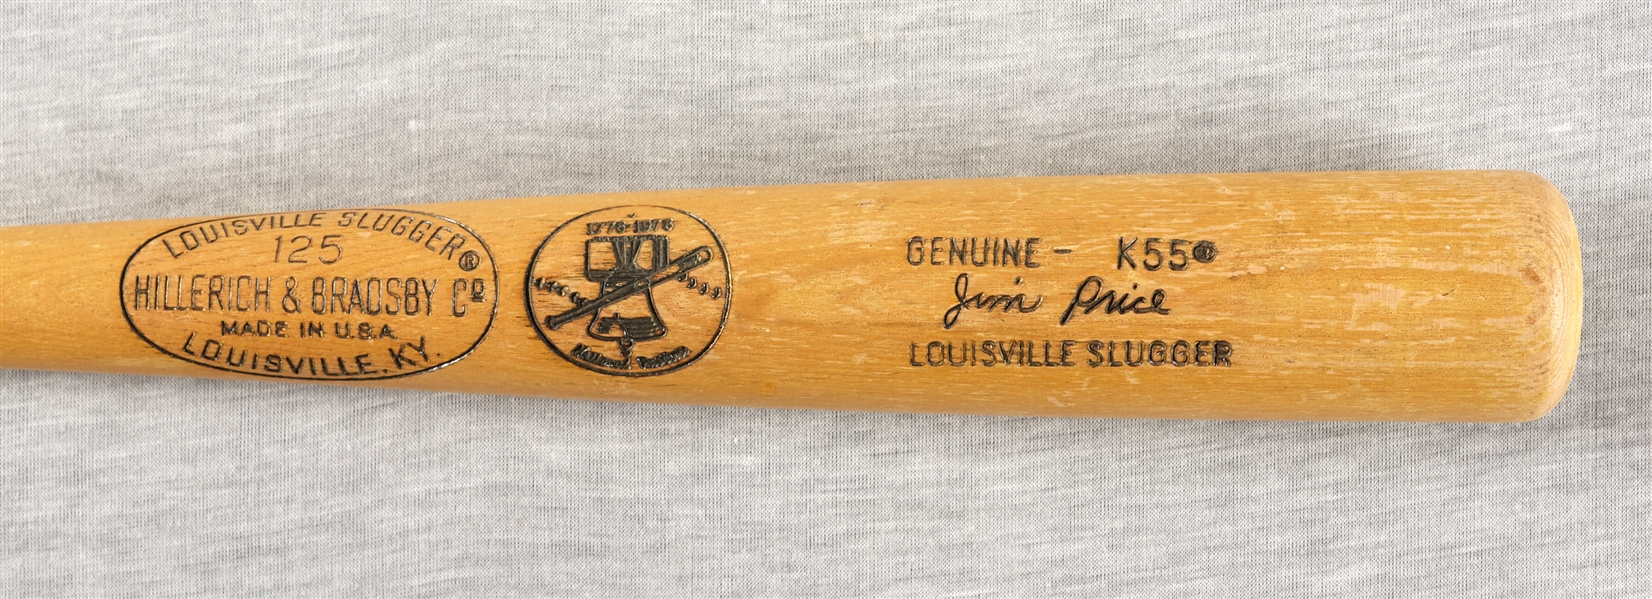 1976 Jim Price Louisville Slugger MLB Centennial Bat